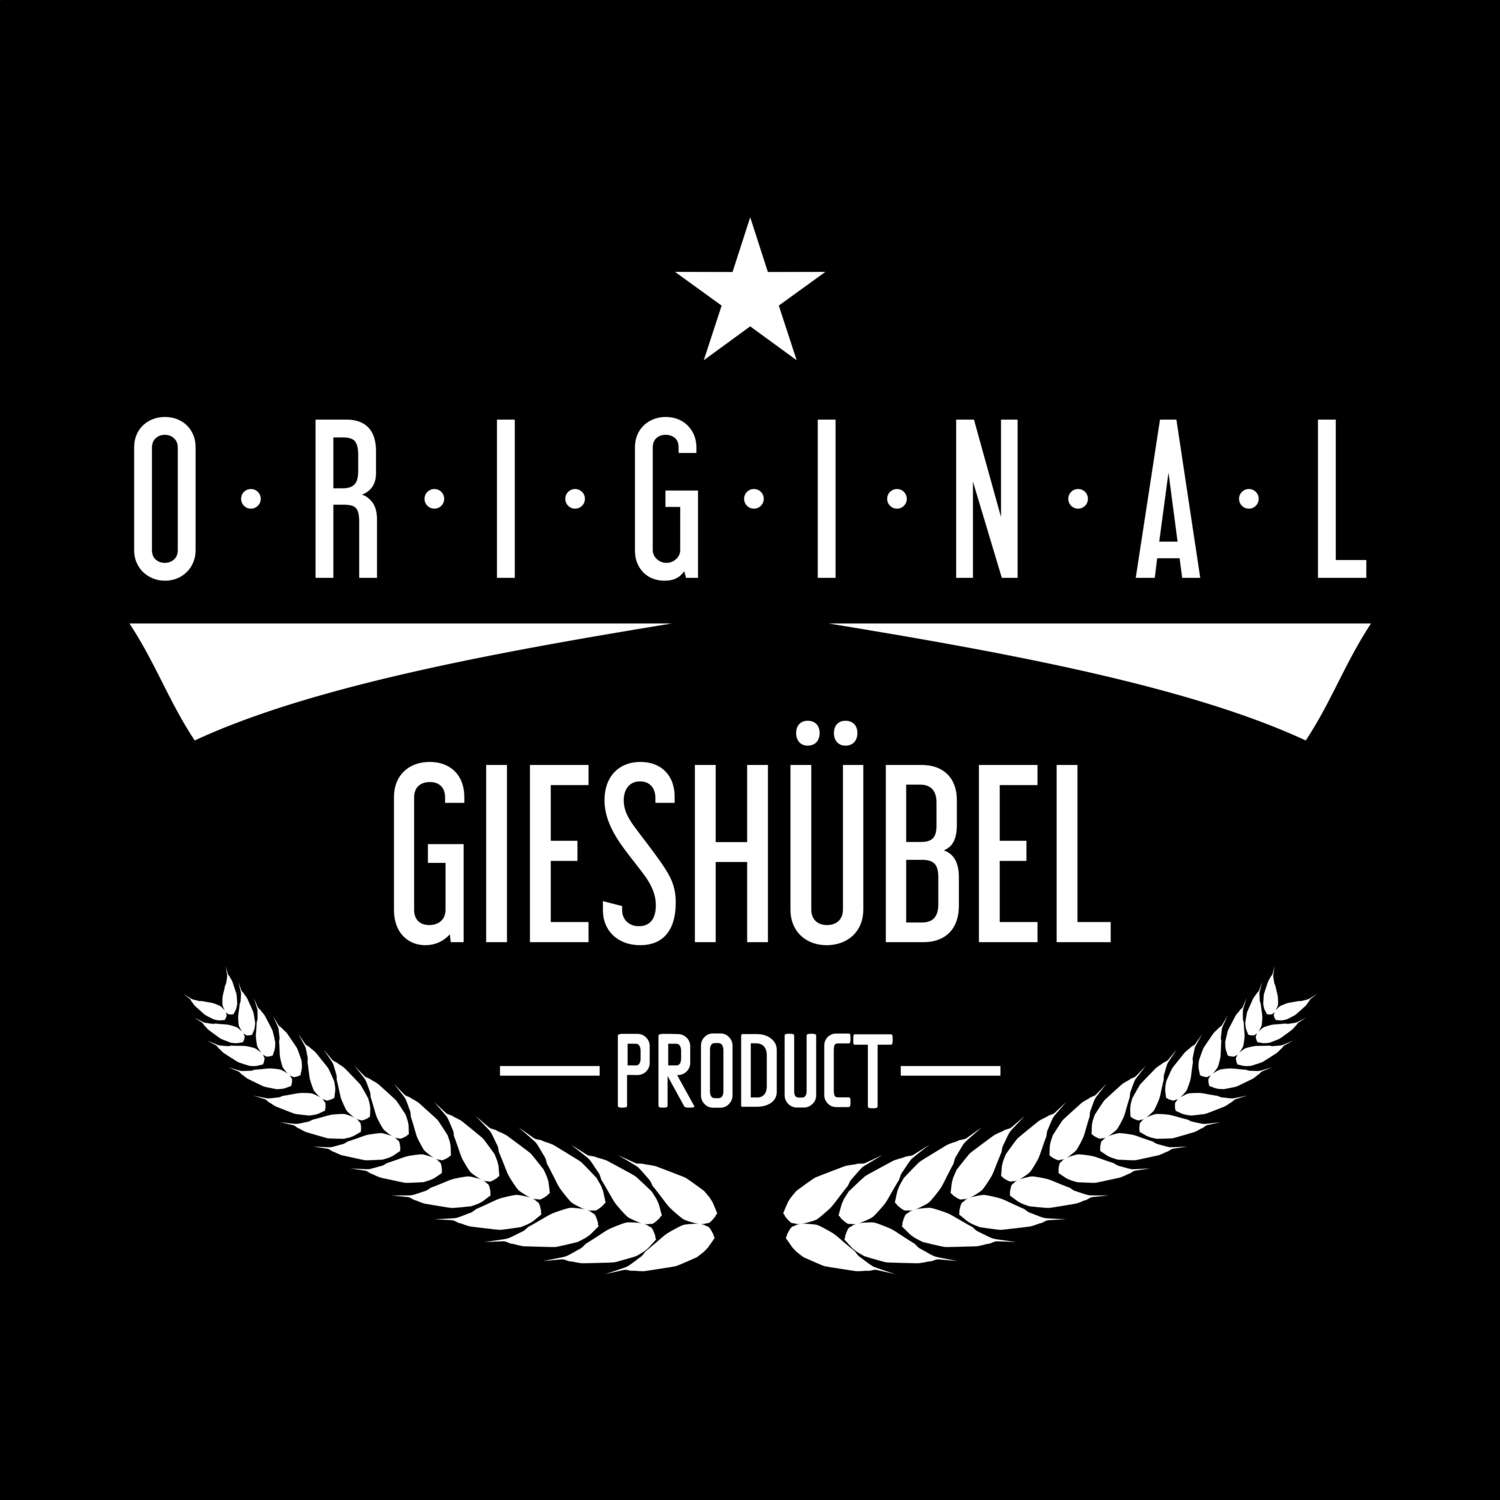 Gieshübel T-Shirt »Original Product«